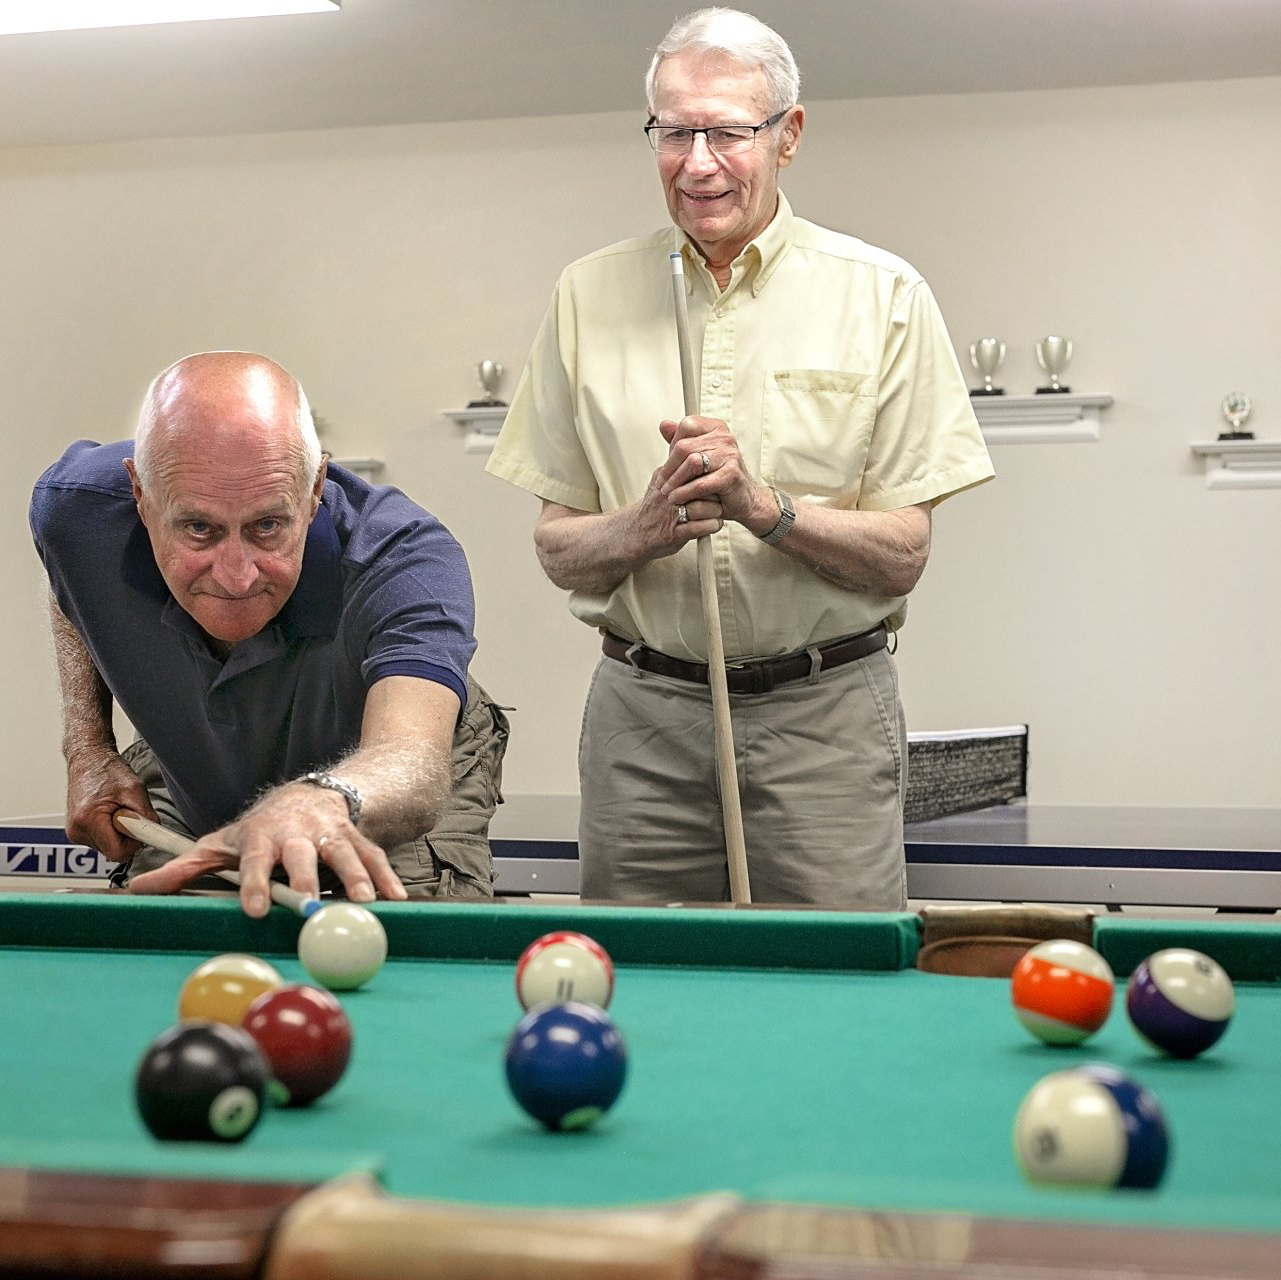 Two senior men shooting pool in the Billiards room at 55+ community